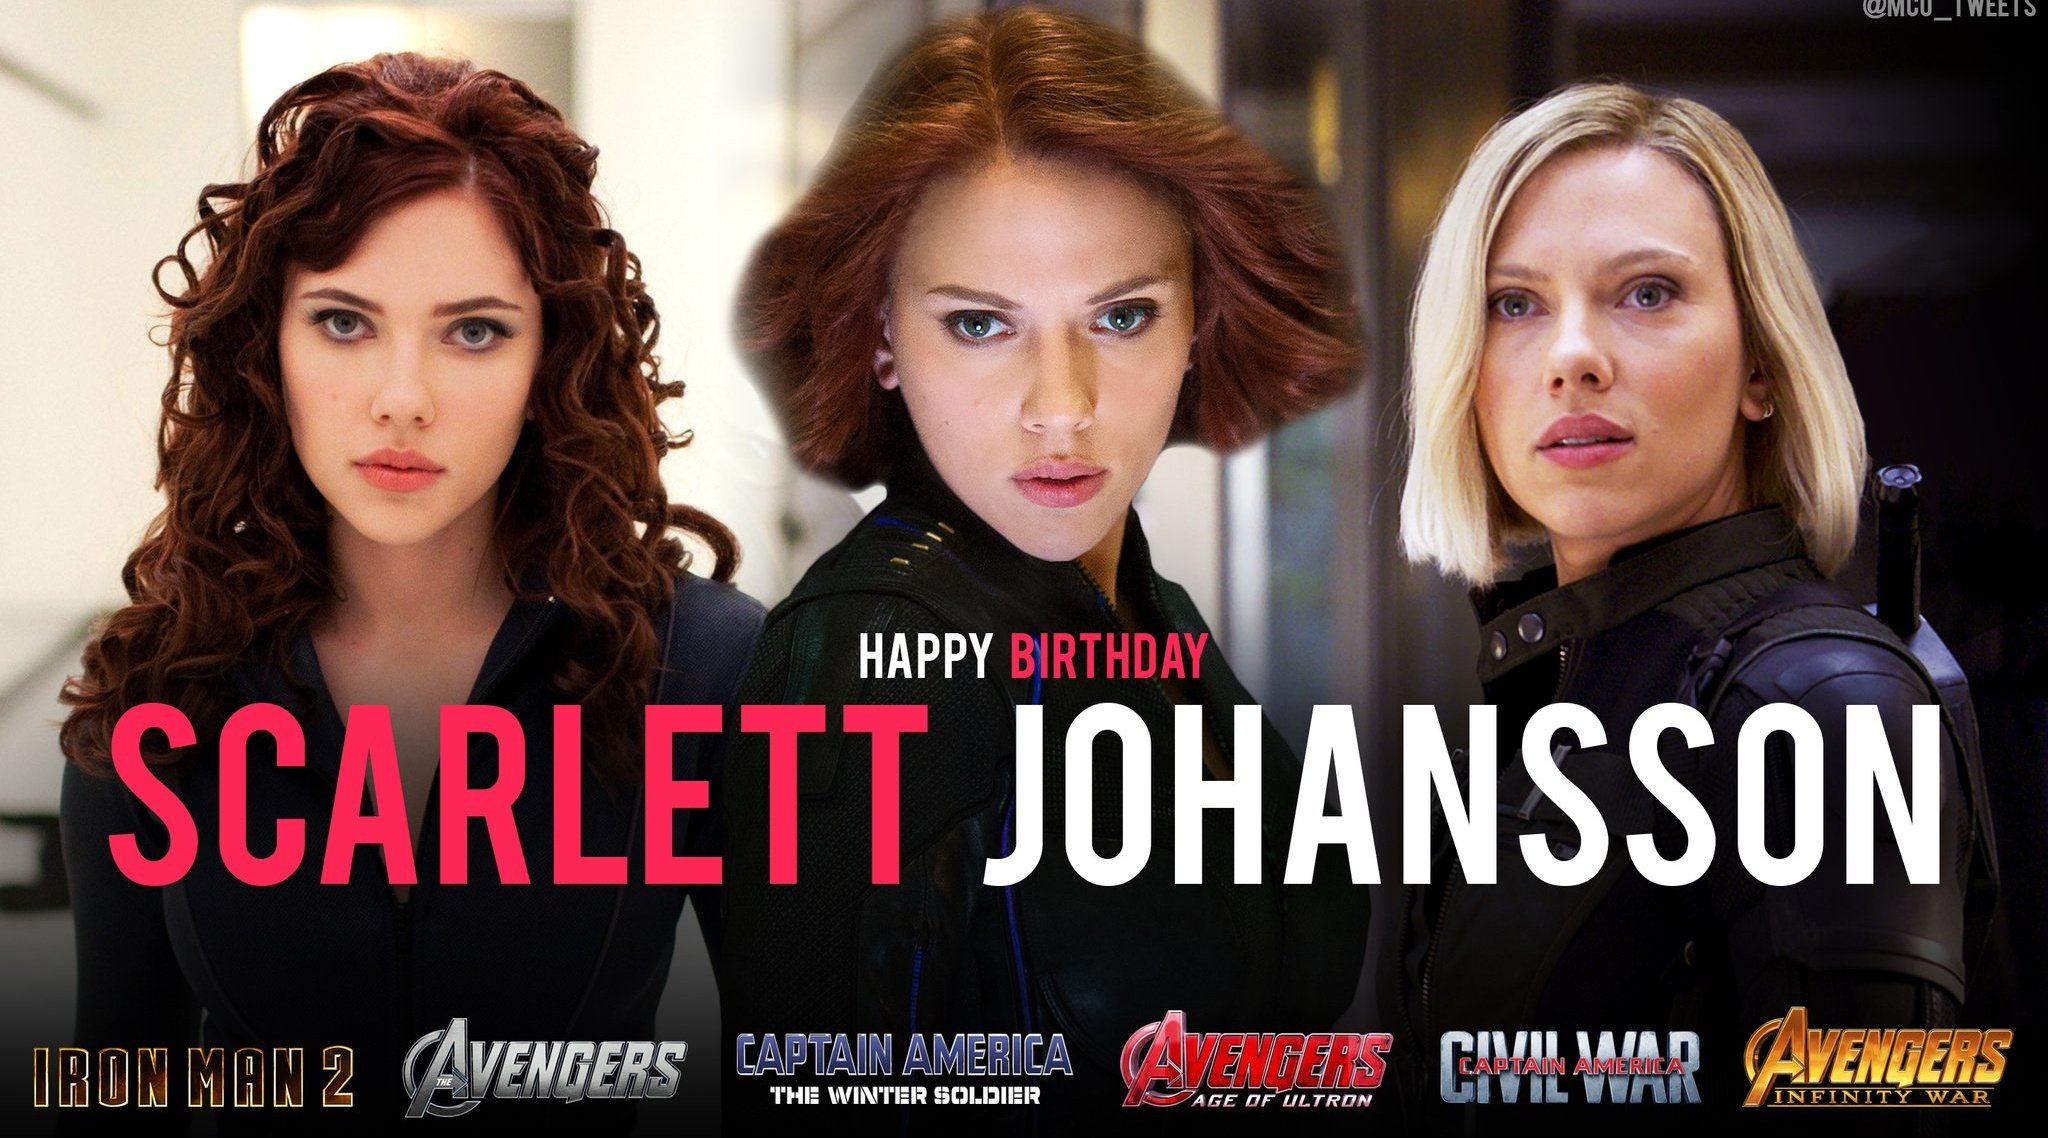 Wishing a very happy 34th birthday to the MCU\s Black Widow, actress Scarlett Johansson 